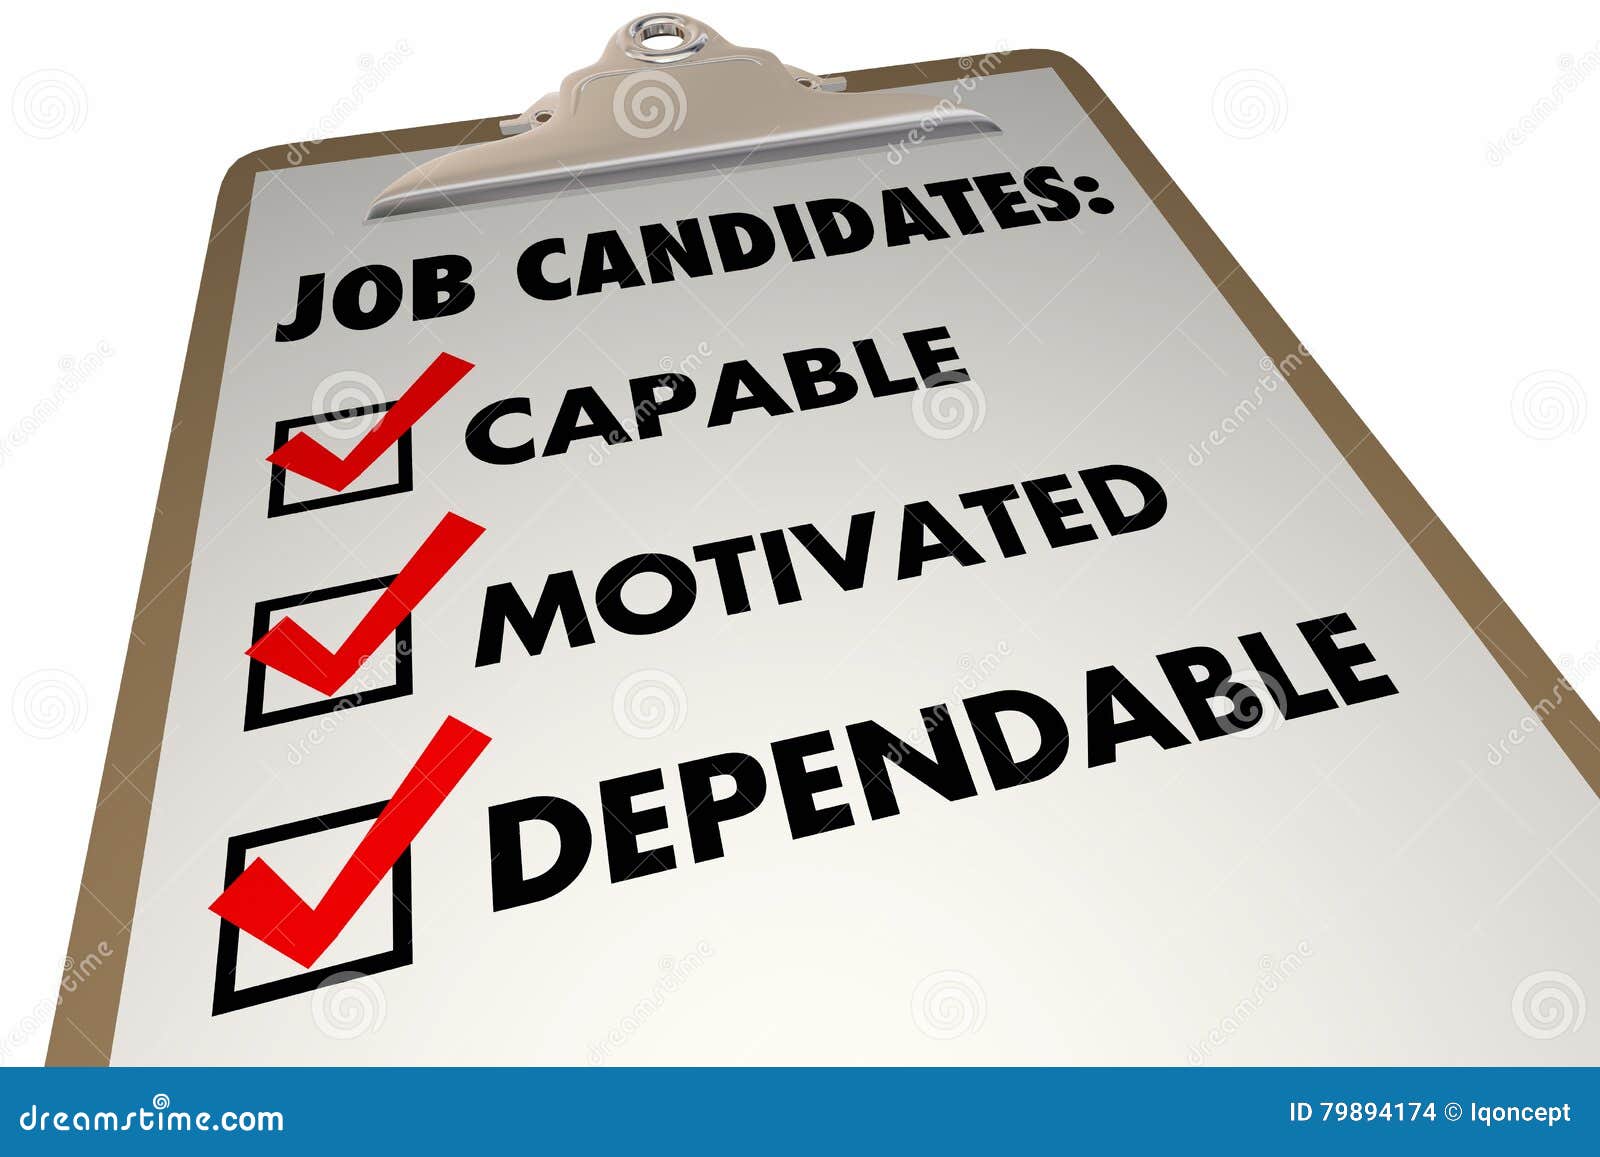 job candidates qualities requirements interview checklist